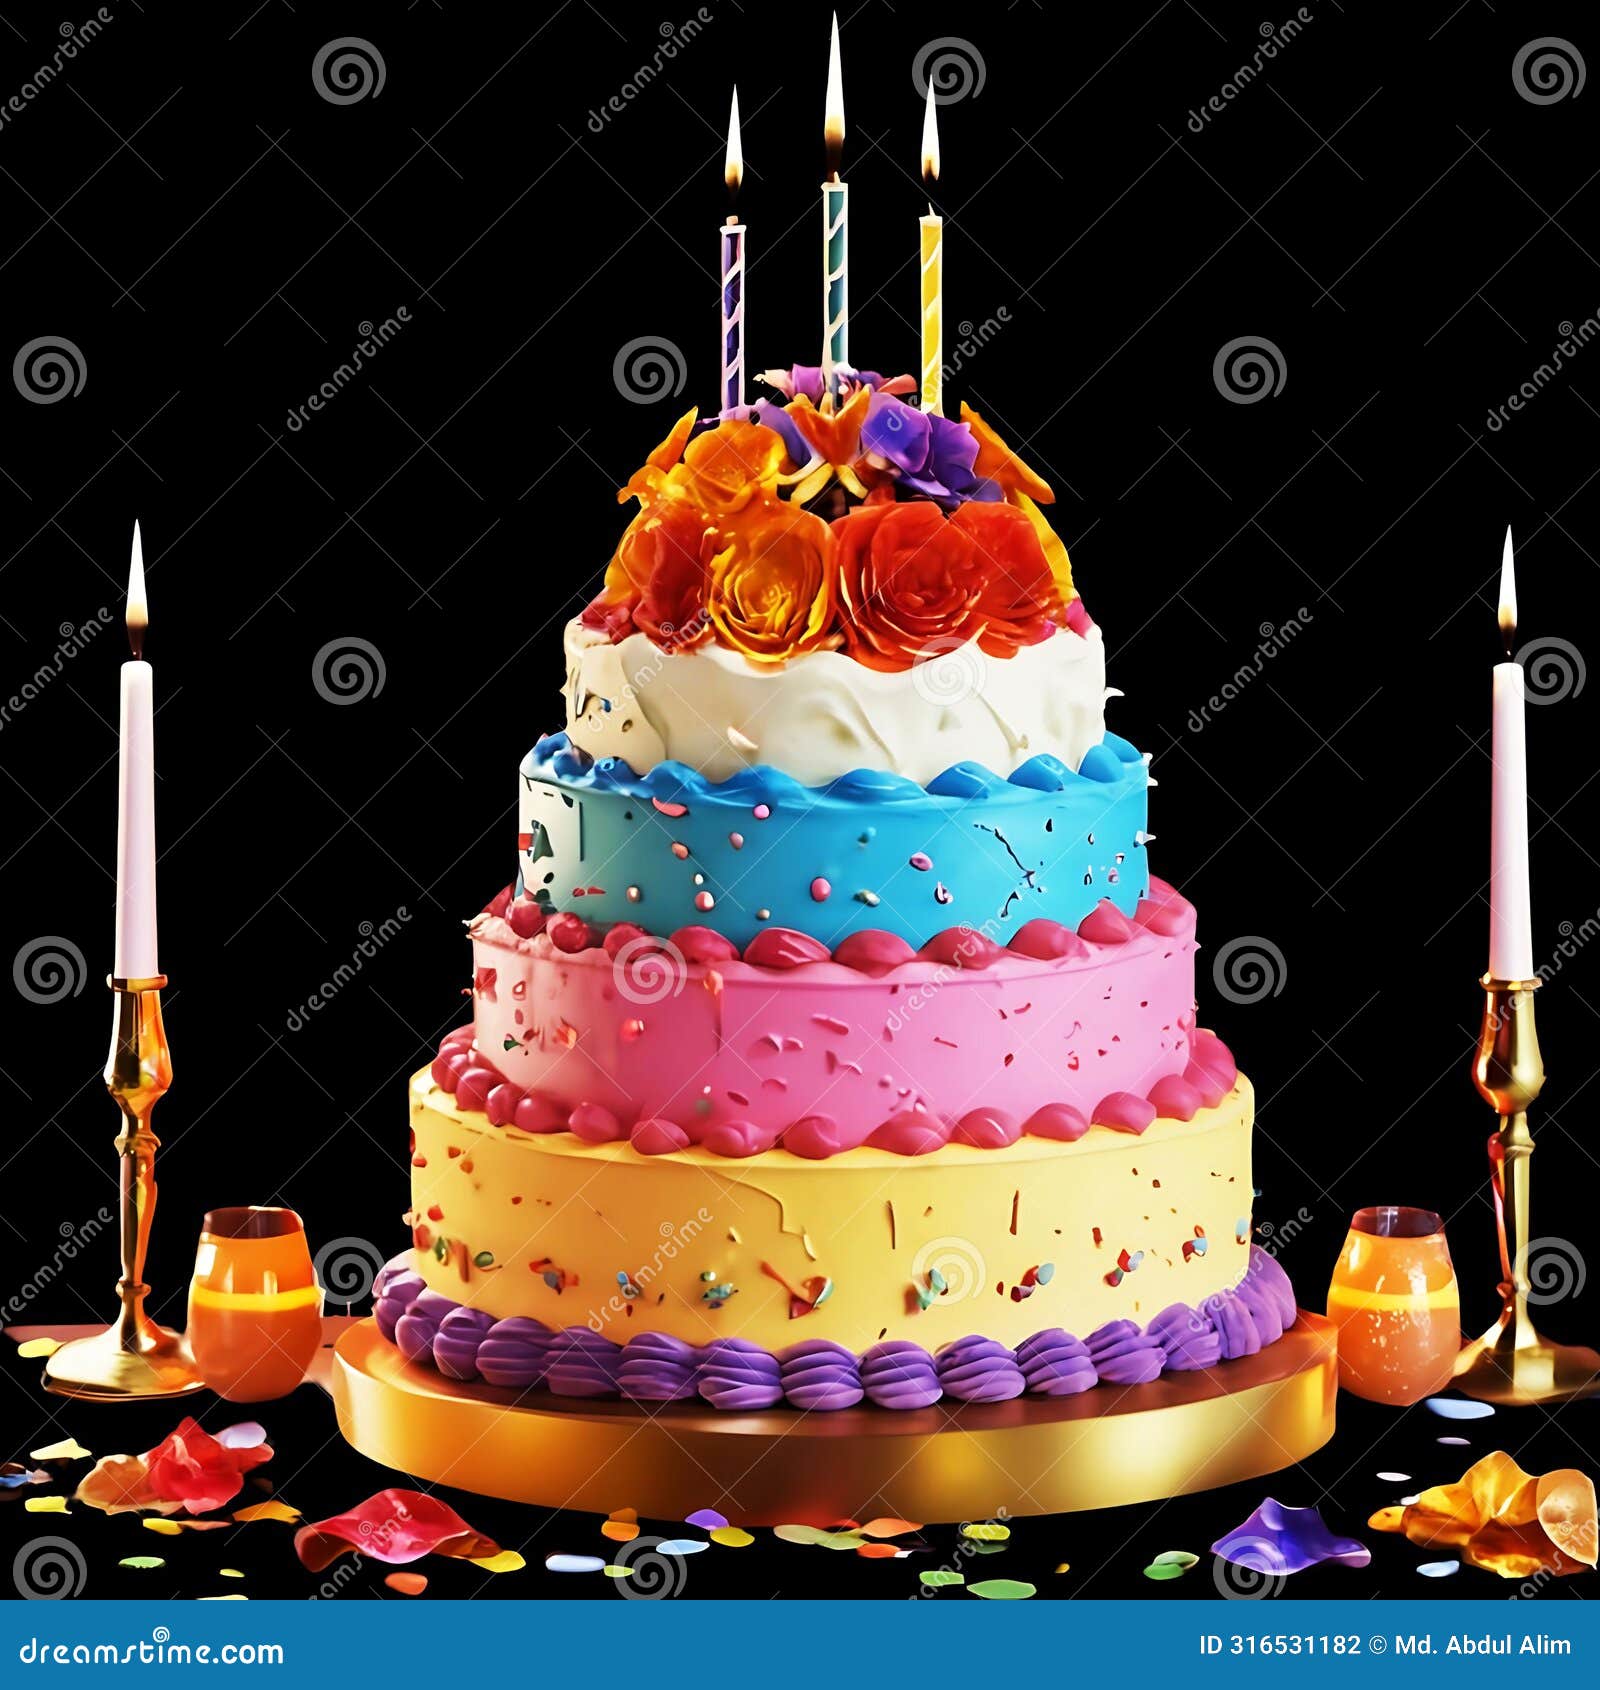 celebrating in style: a festive birthday cake delight